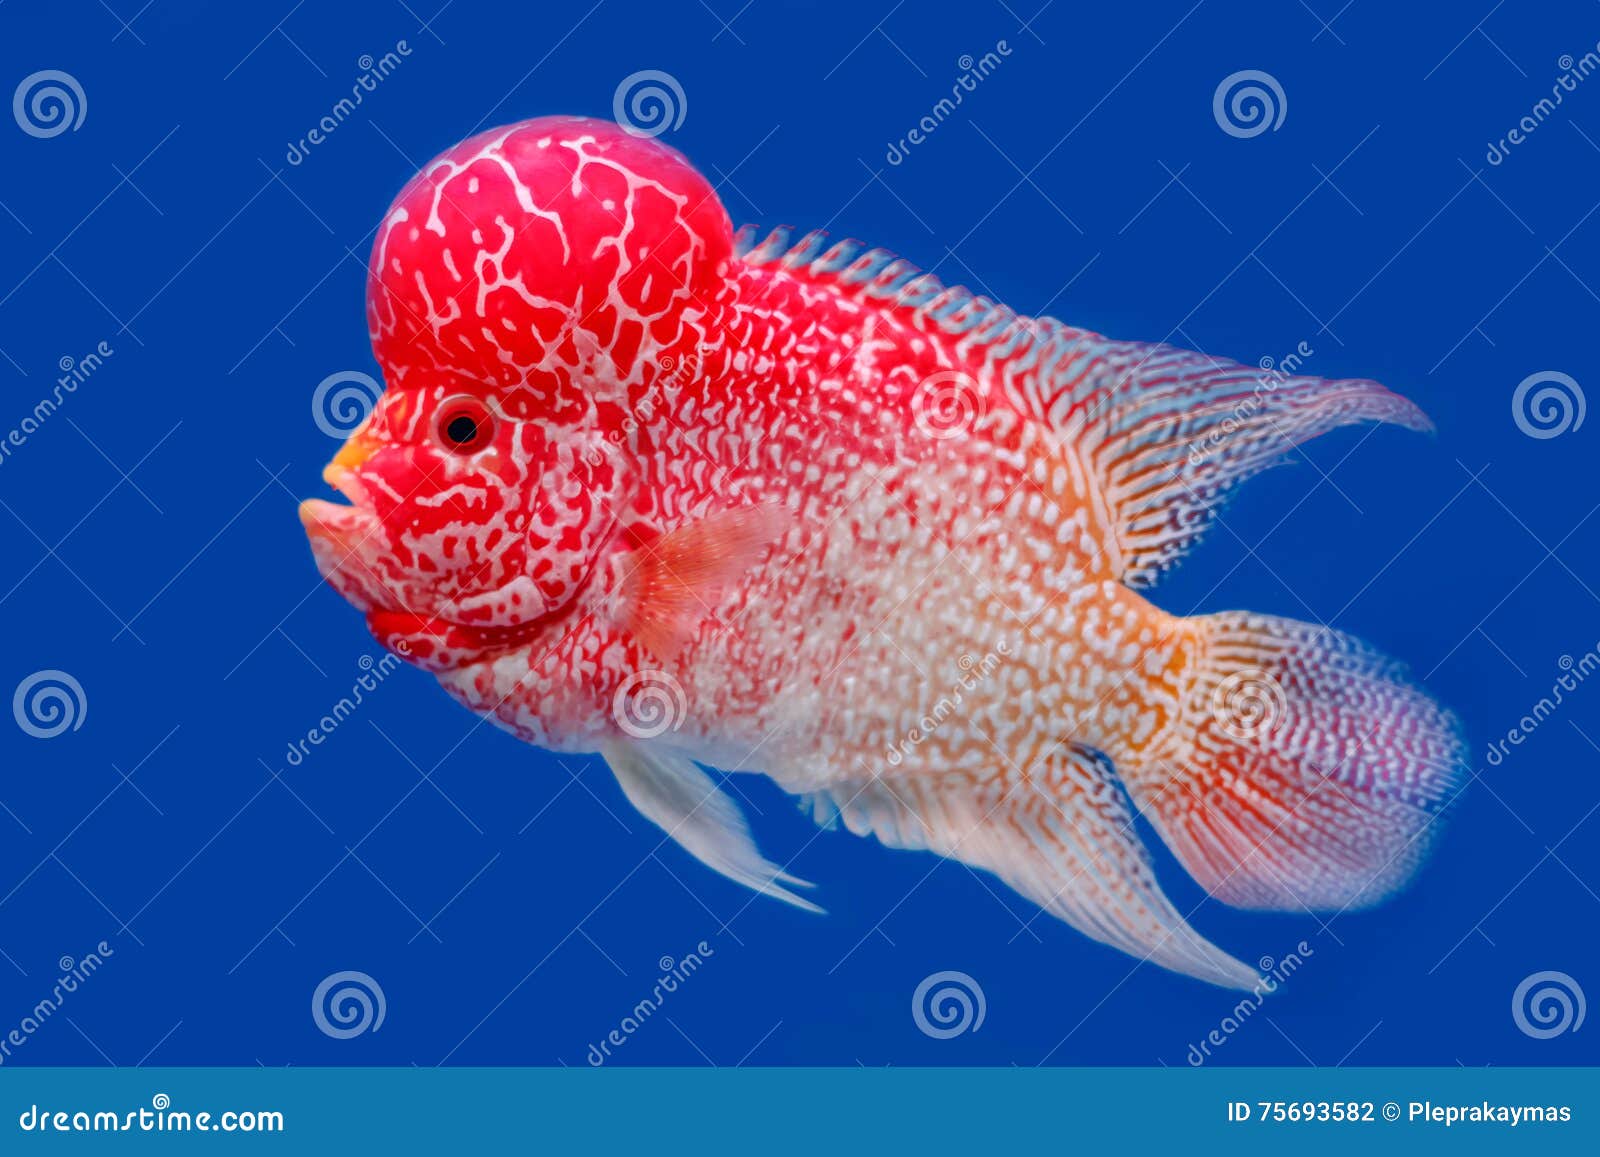 flowerhorn  Wild animals pictures Oscar fish Fish art